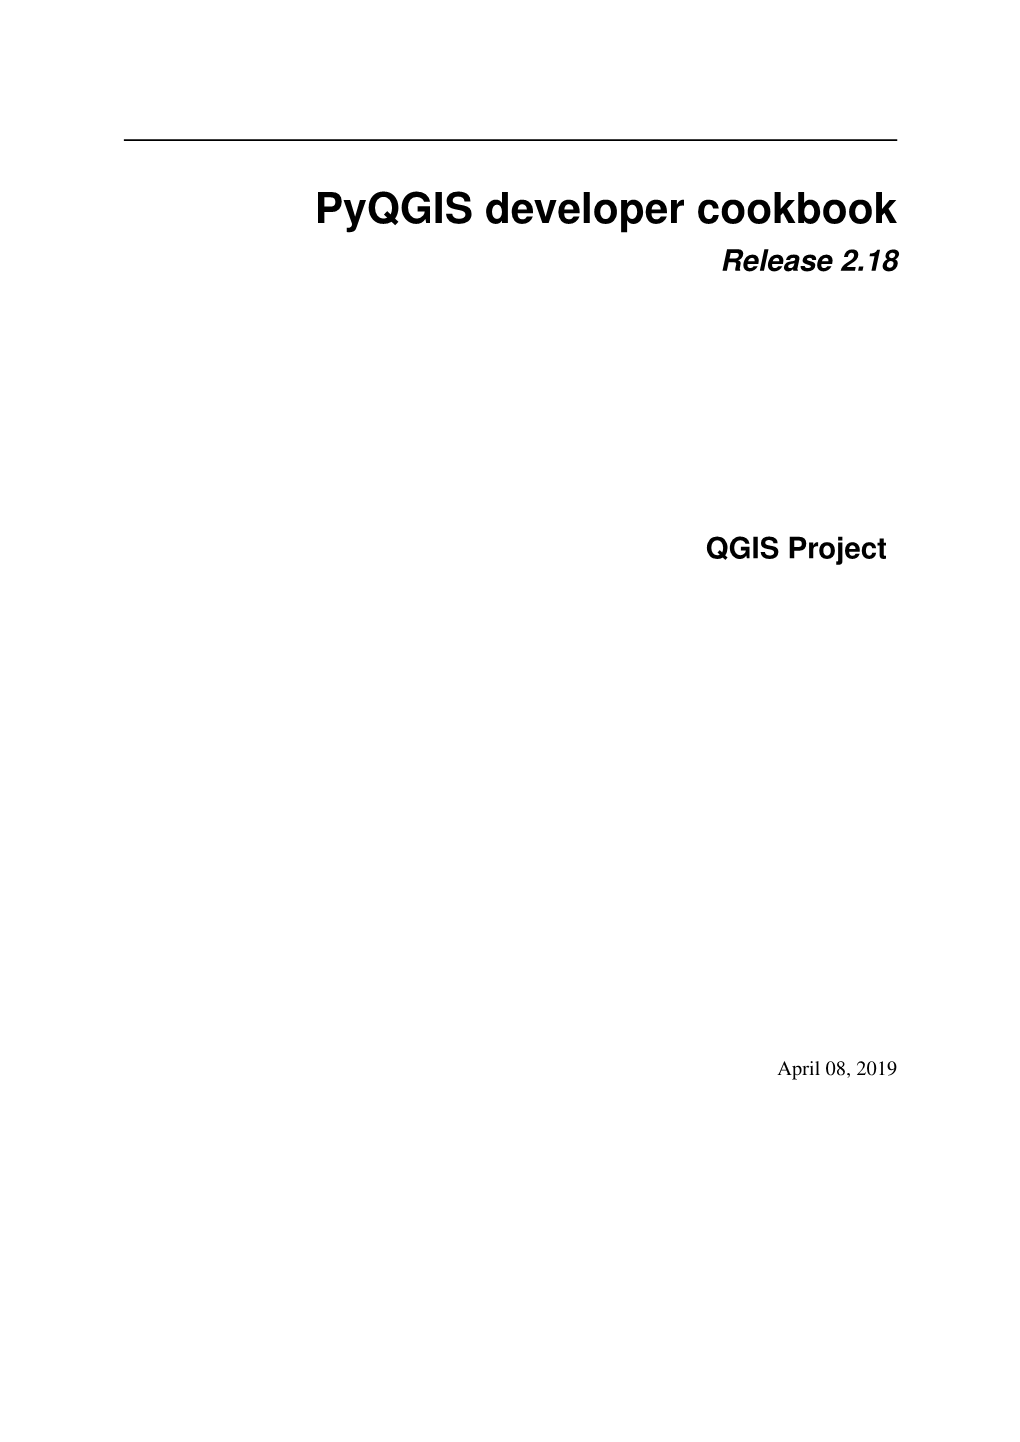 Pyqgis Developer Cookbook Release 2.18